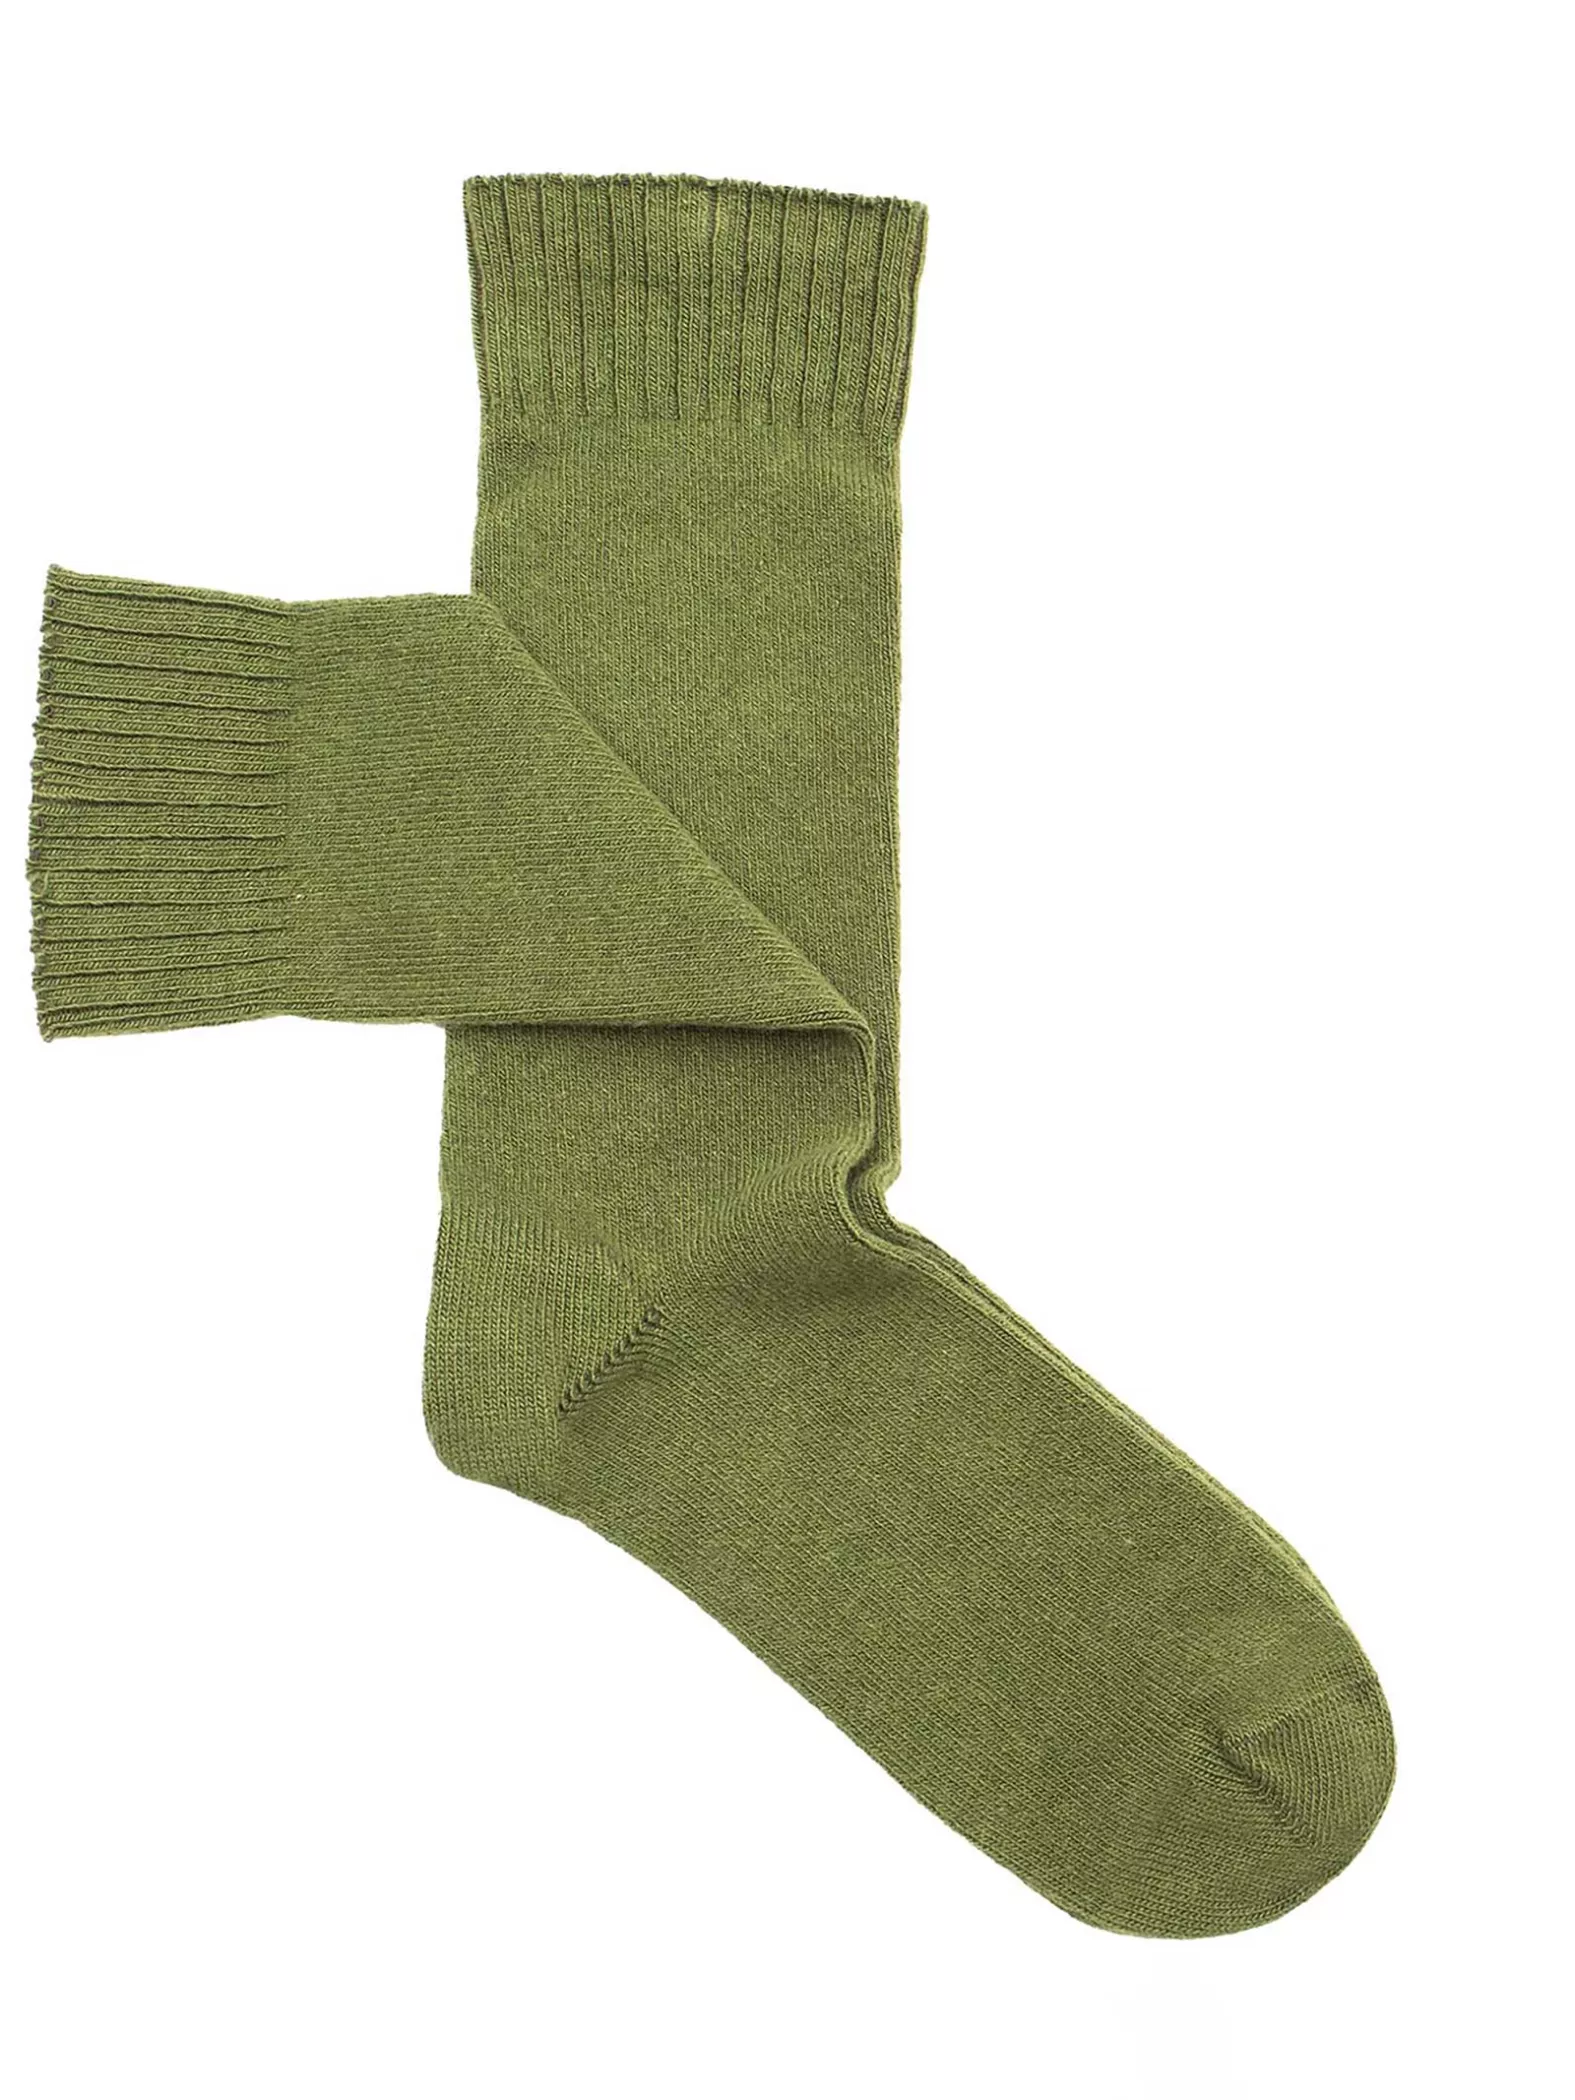 Plain Cashmere Man's Short Socks